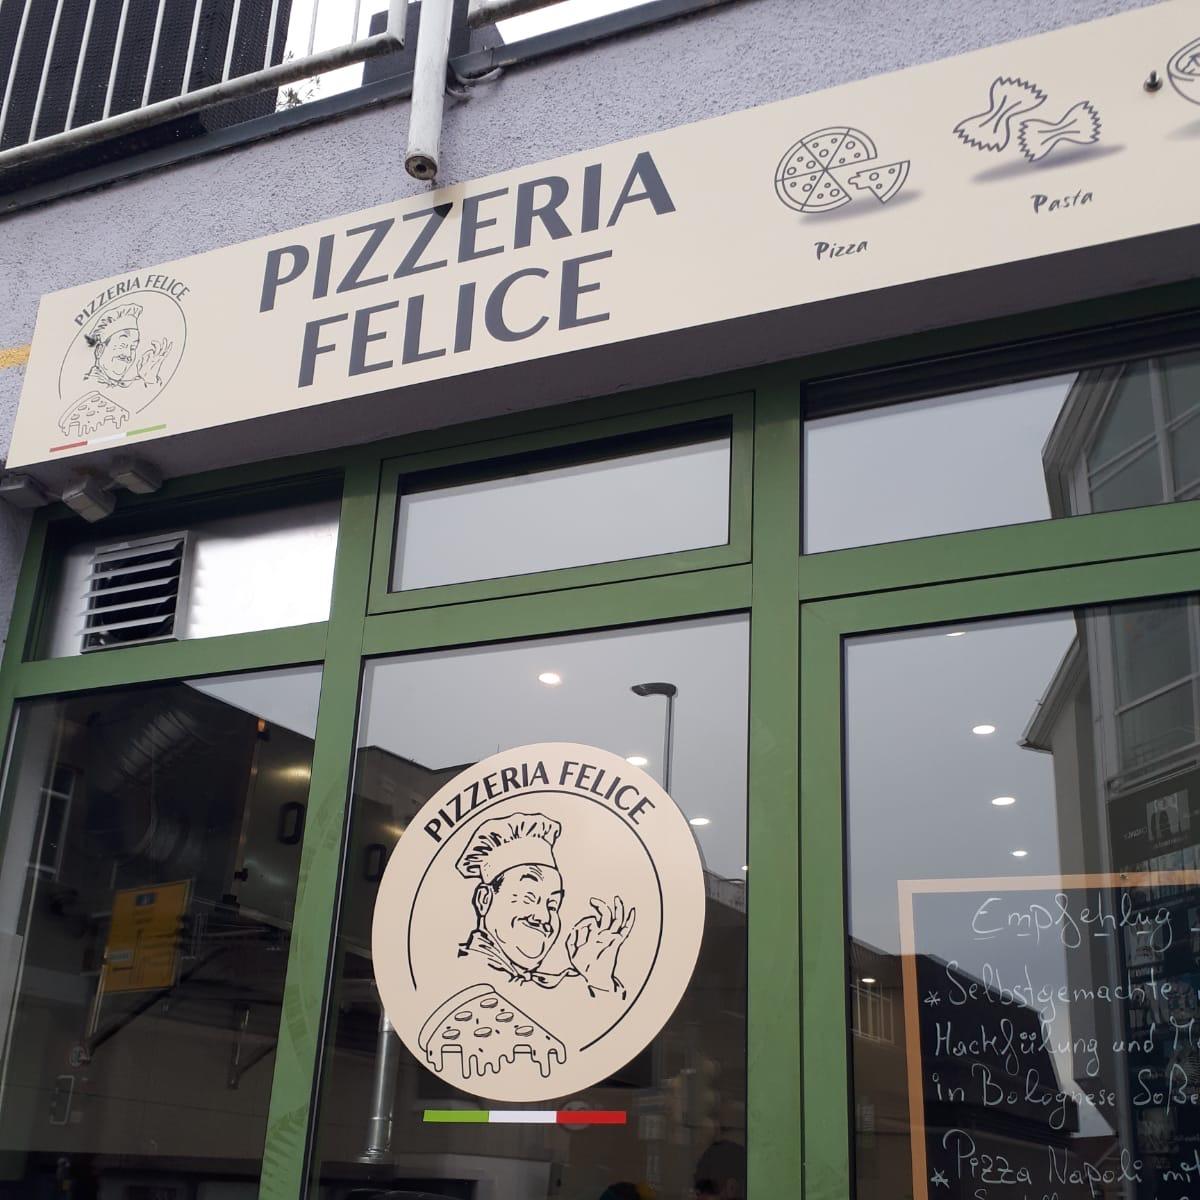 Restaurant "Pizzeria Felice" in Wiesloch